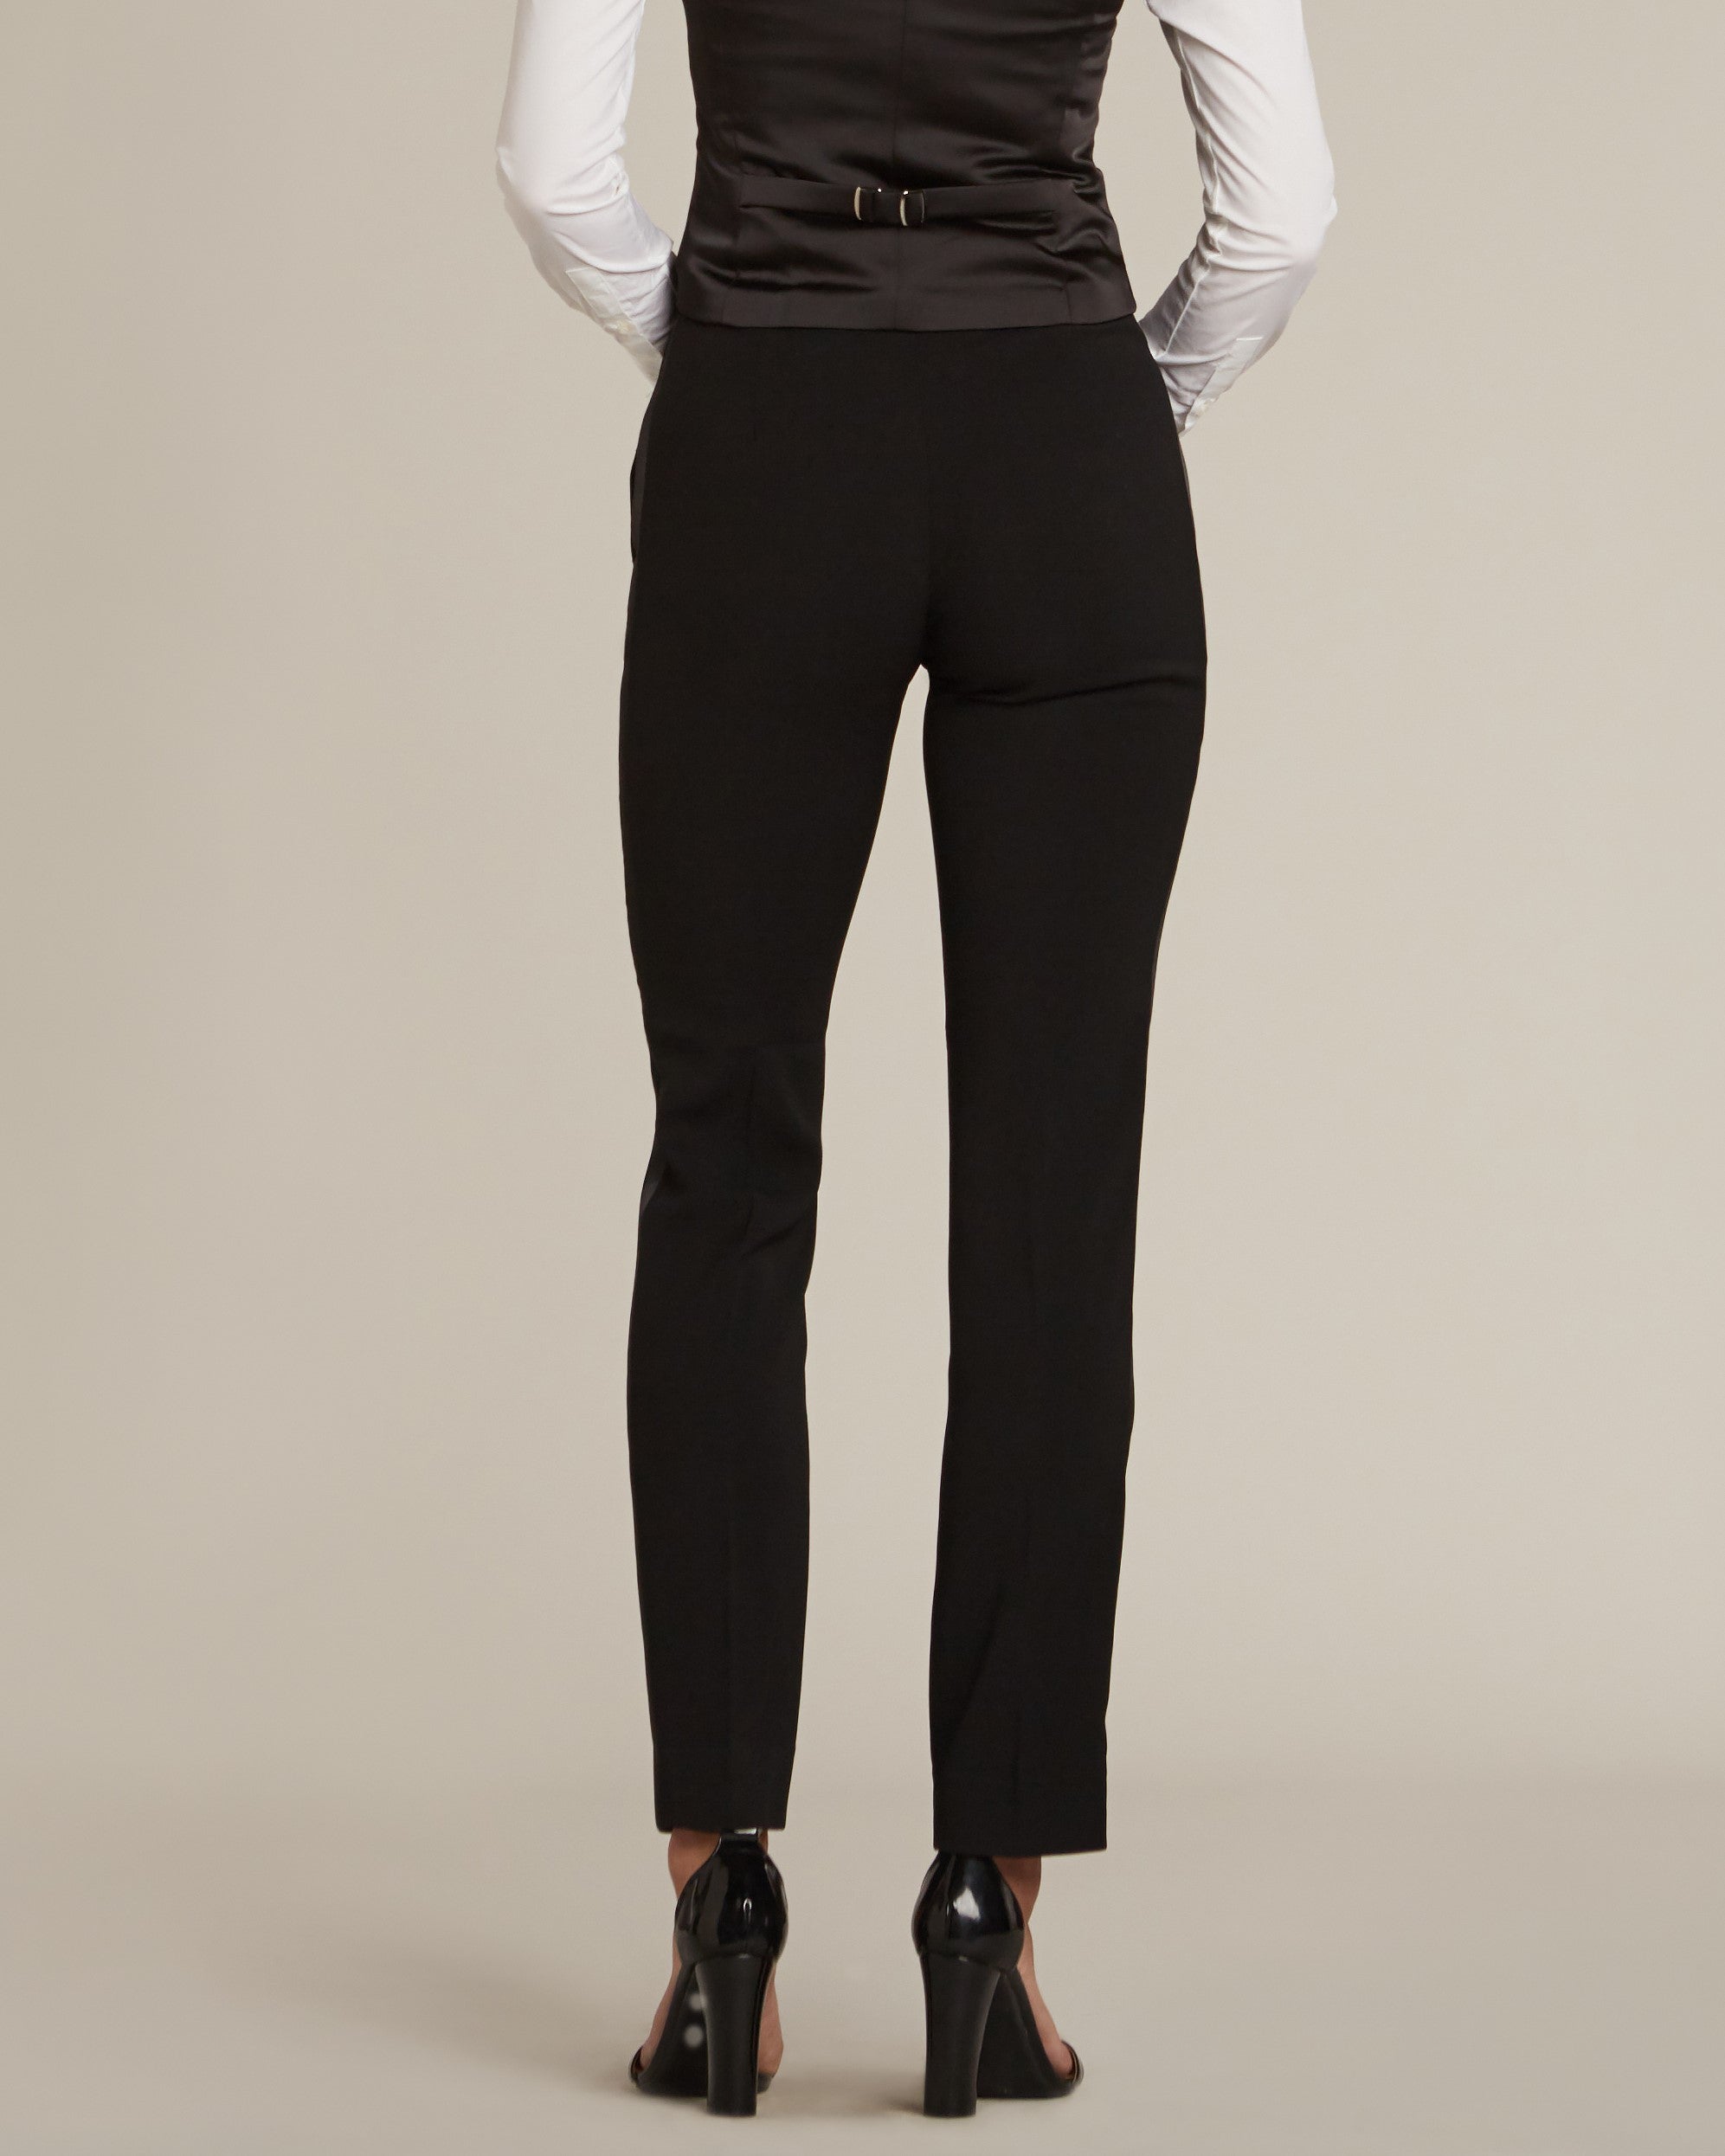 New Era Factory Outlet iInc Men's Black Tuxedo Pants with Satin Stripe  (36L) at Amazon Men's Clothing store